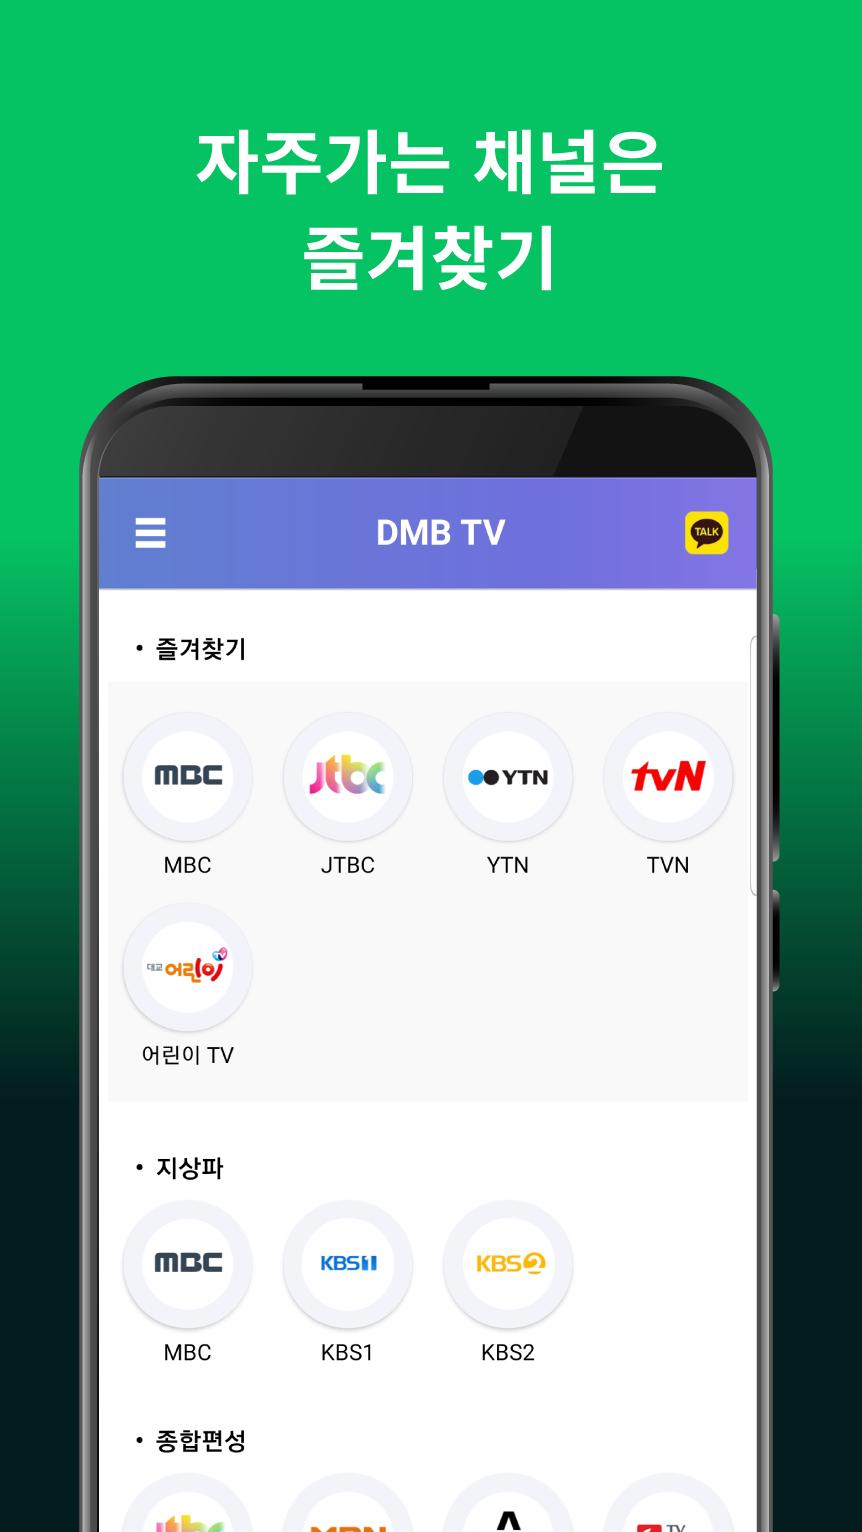 DMB TV 실시간무료TV, 실시간TV 방송, 지상파, 디엠비 방송시청, 모바일 무료티비 1.0.1 Screenshot 8